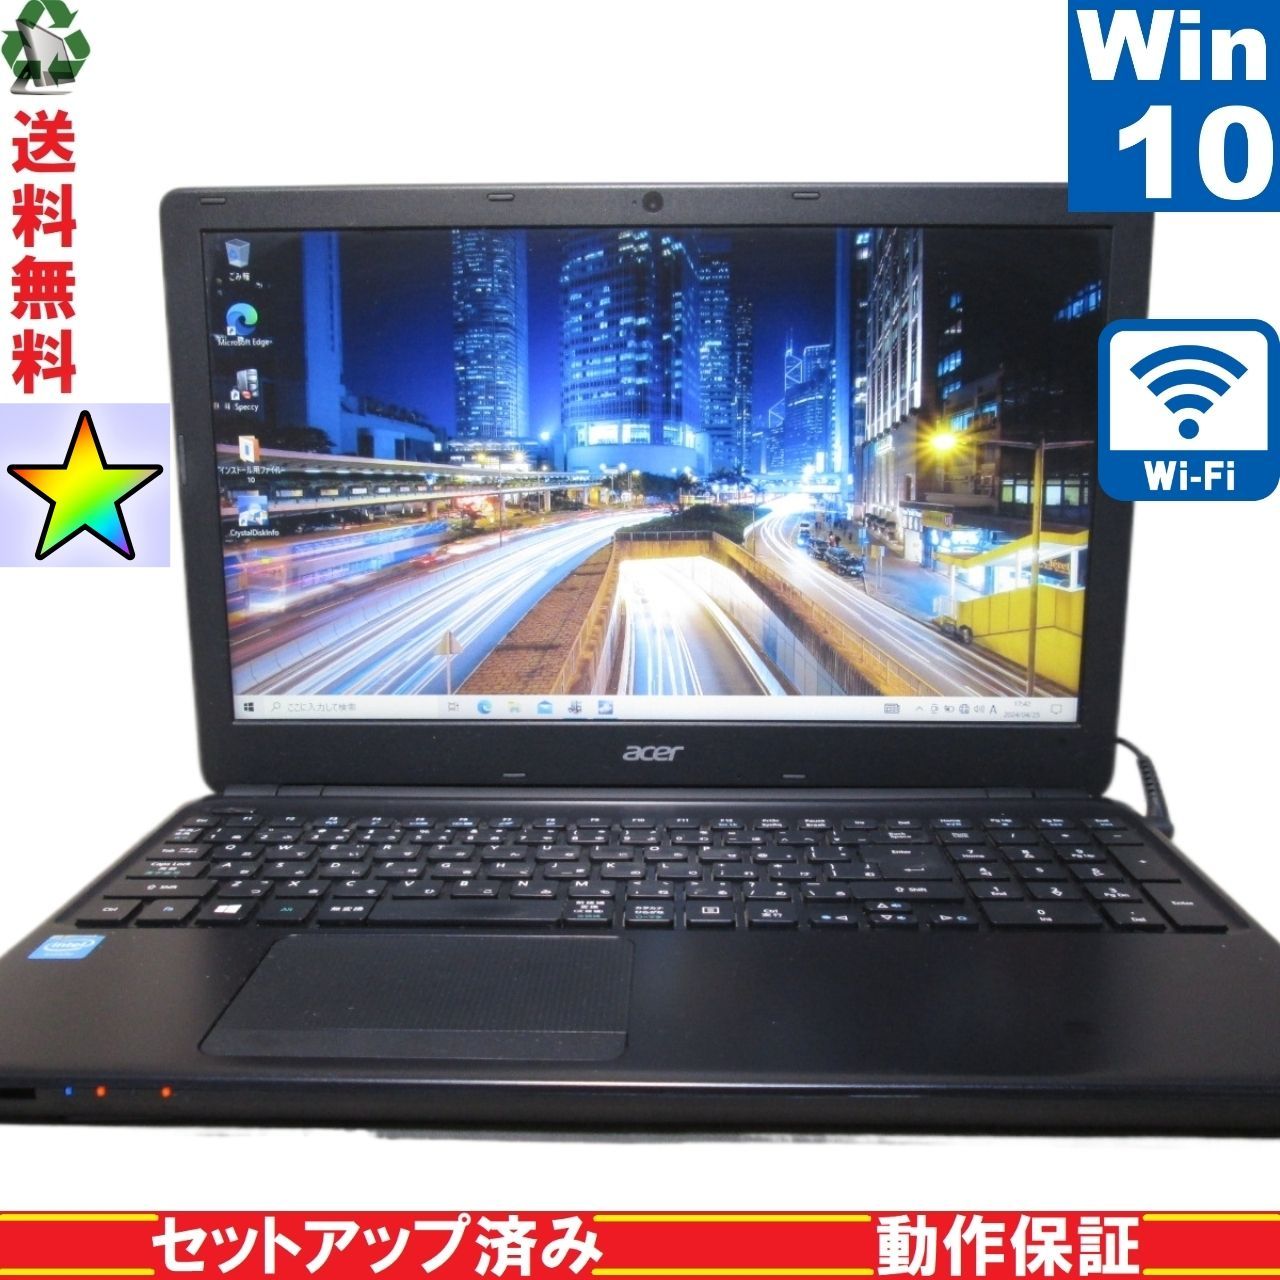 Acer TravelMate TMP255M-H12C【Celeron 2955U 1.4GHz】 【Windows10 Pro】 Libre  Office Wi-Fi USB3.0 Bluetooth HDMI 長期保証 [89170] - メルカリ